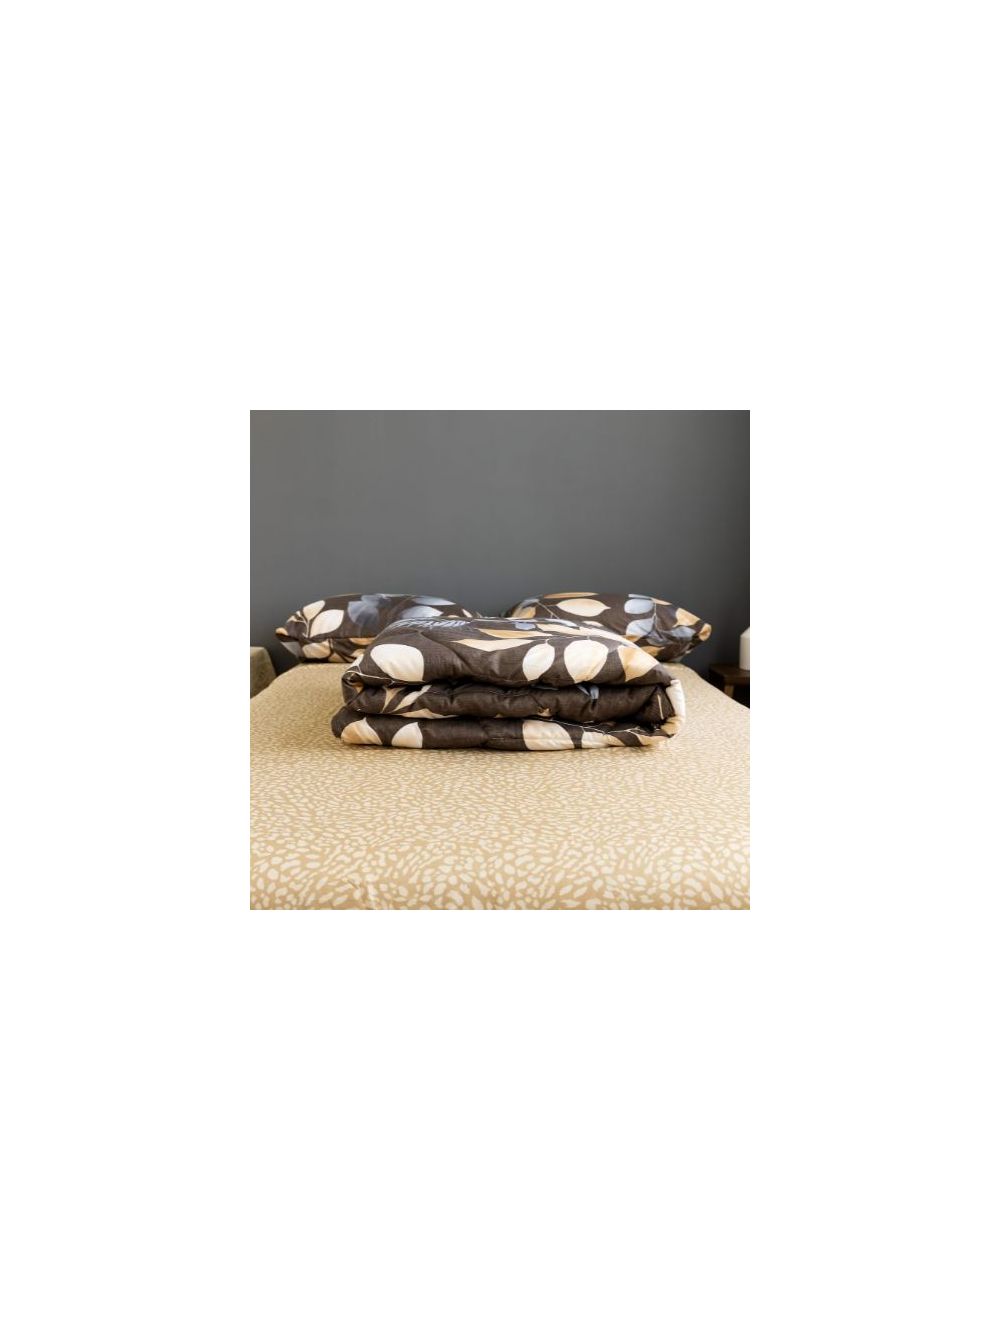 DEALS FOR LESS -  luna home -  Comforter Set of 4 Pieces, Leaves design anchor grey color (1 Comforter + 1 Flat sheet + 2 Large pillow case-CFT42-05